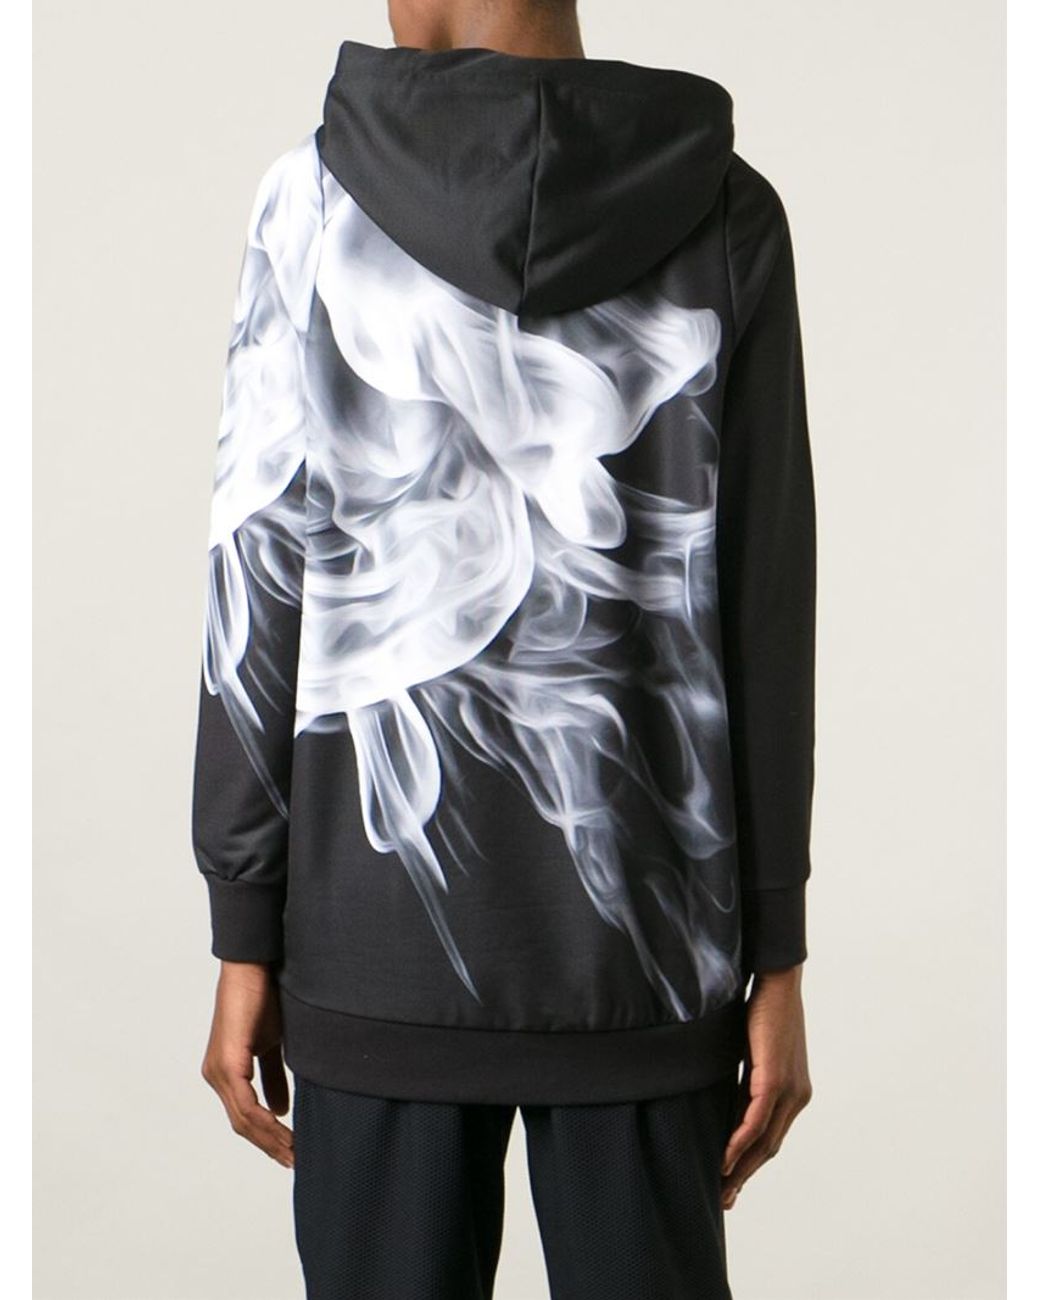 adidas Originals 'Smoke' Sweatshirt in Black | Lyst